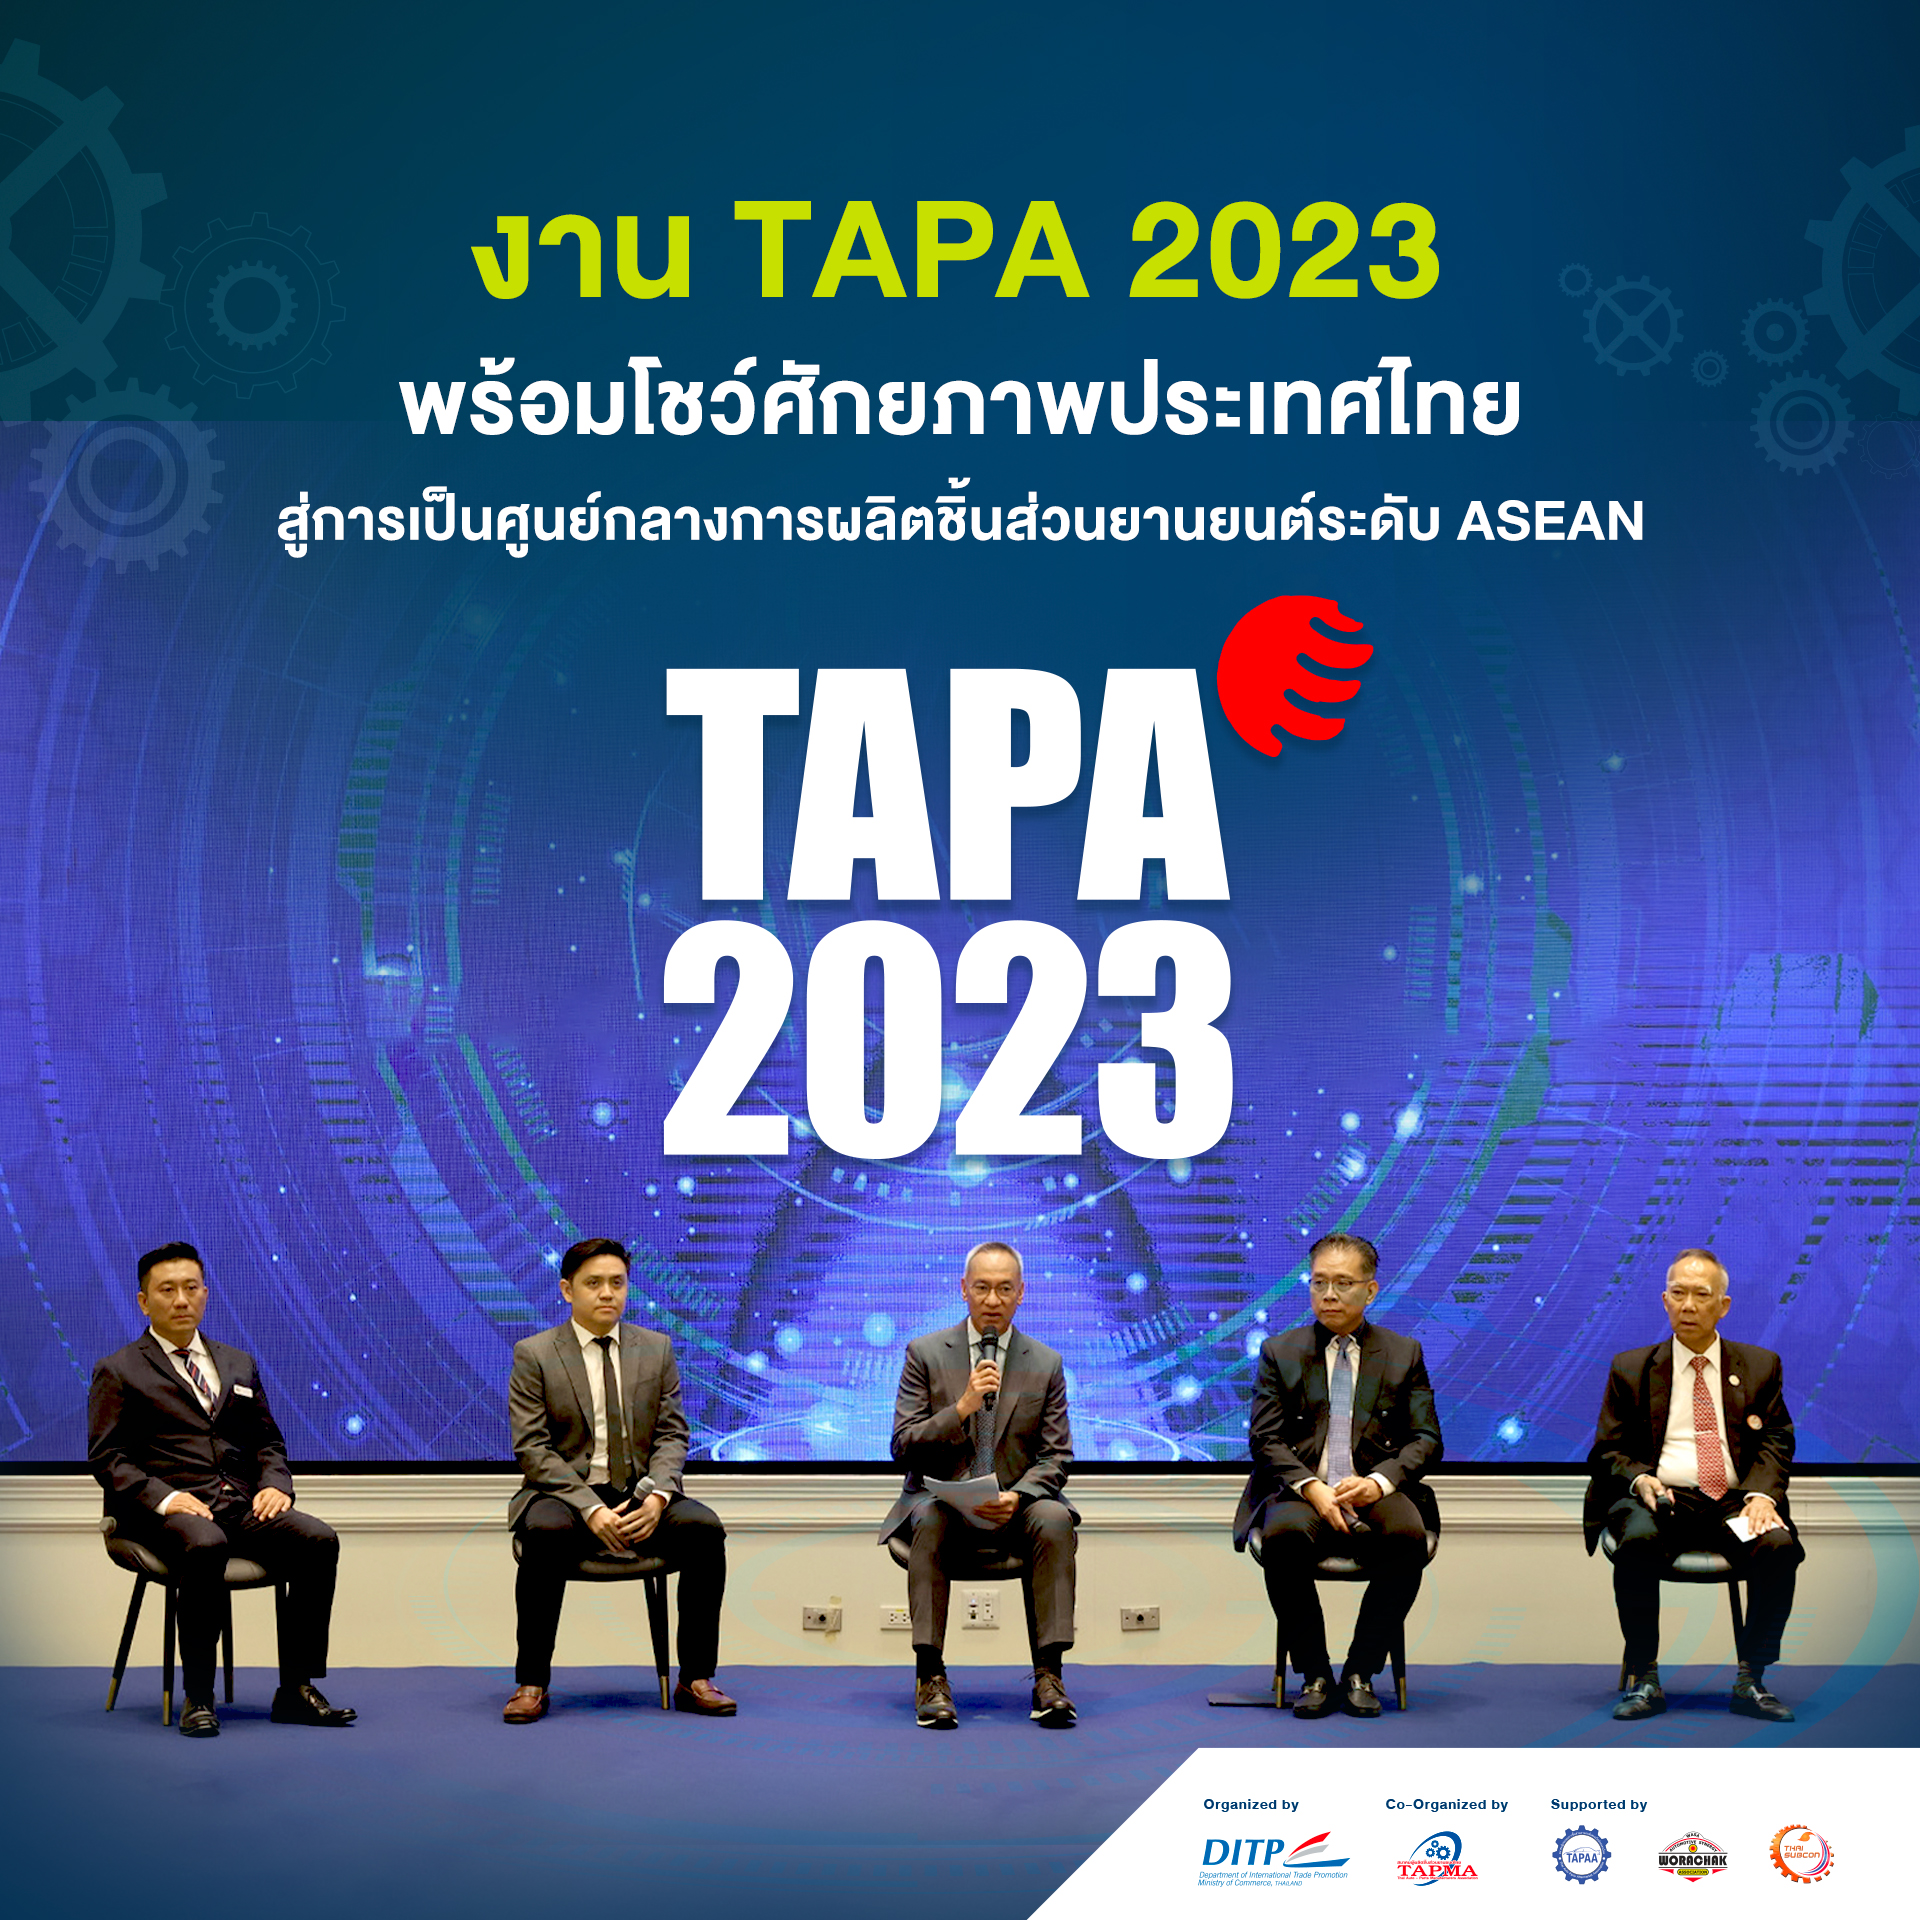 DITP ผนึกกำลังภาคเอกชน เตรียมโชว์ศักยภาพของอุตสาหกรรมชิ้นส่วนยานยนต์ไทยในงาน TAPA 2023